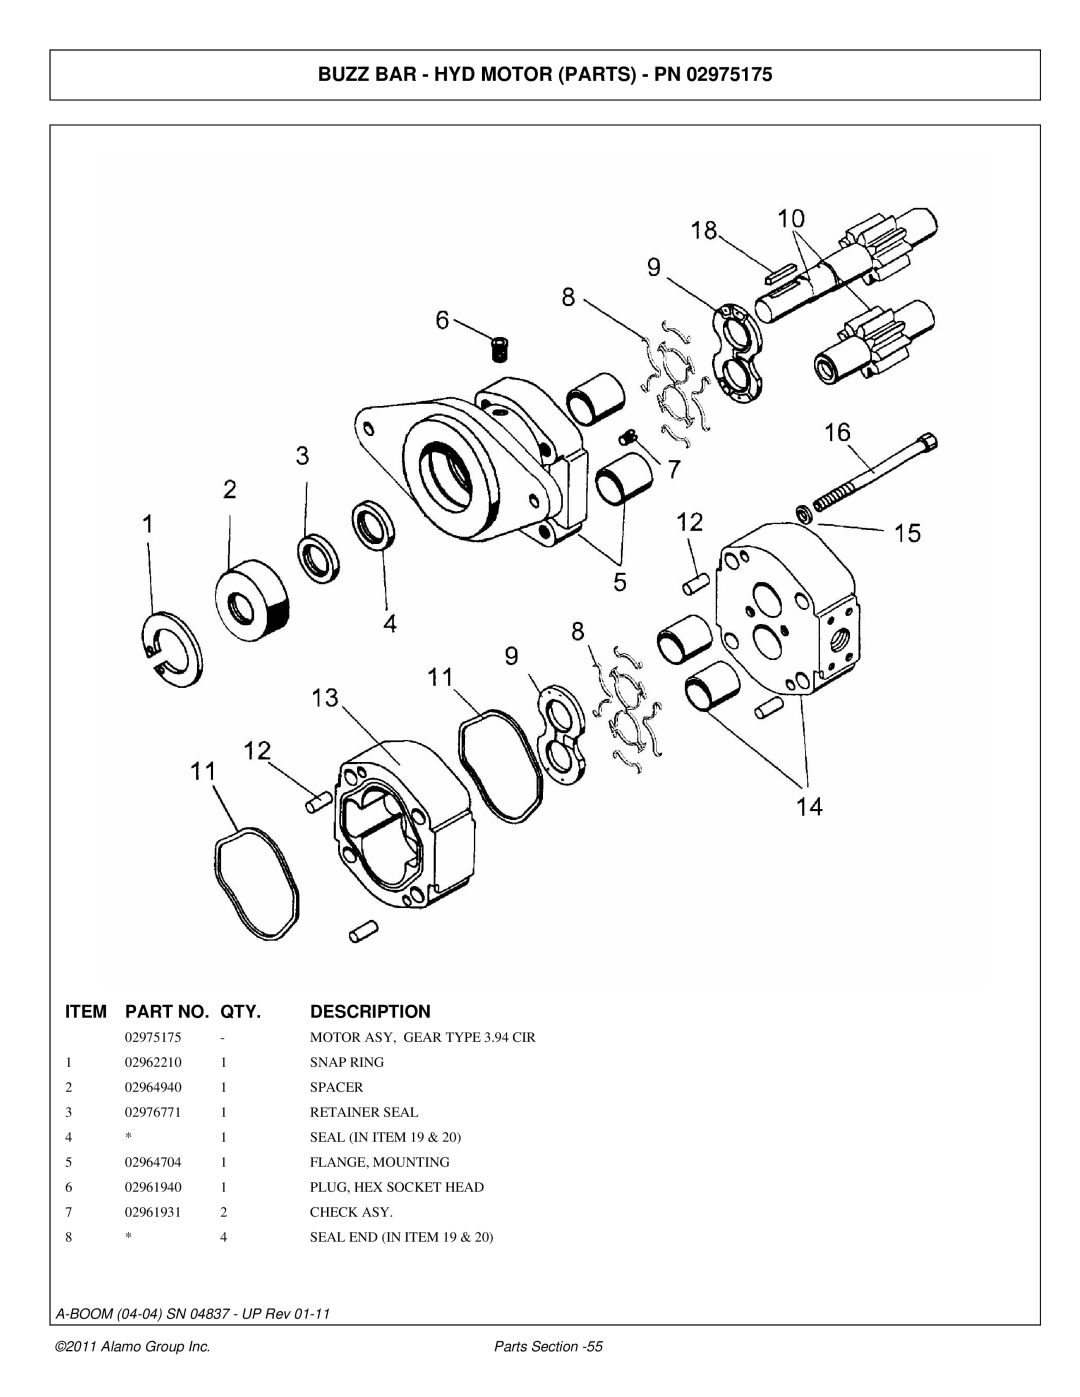 Alamo 4837 manual Buzz BAR HYD Motor Parts PN, FLANGE, Mounting, PLUG, HEX Socket Head 